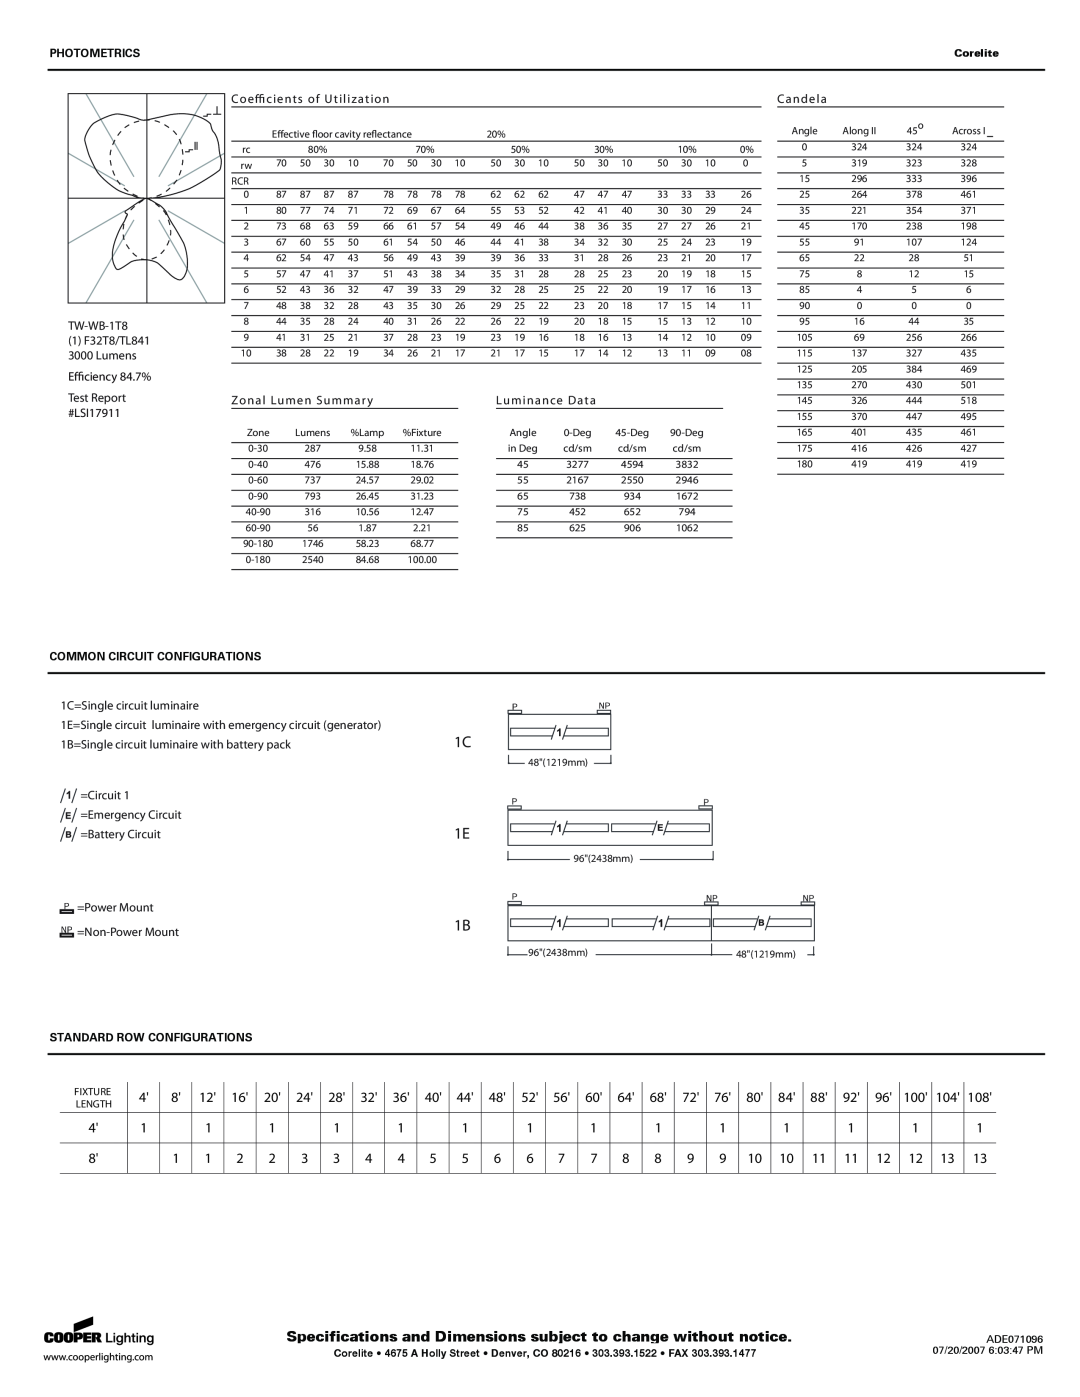 Cooper Lighting 1T8 specifications PHOTOMETRICSCorelite, Common Circuit Configurations, Standard Row Configurations 